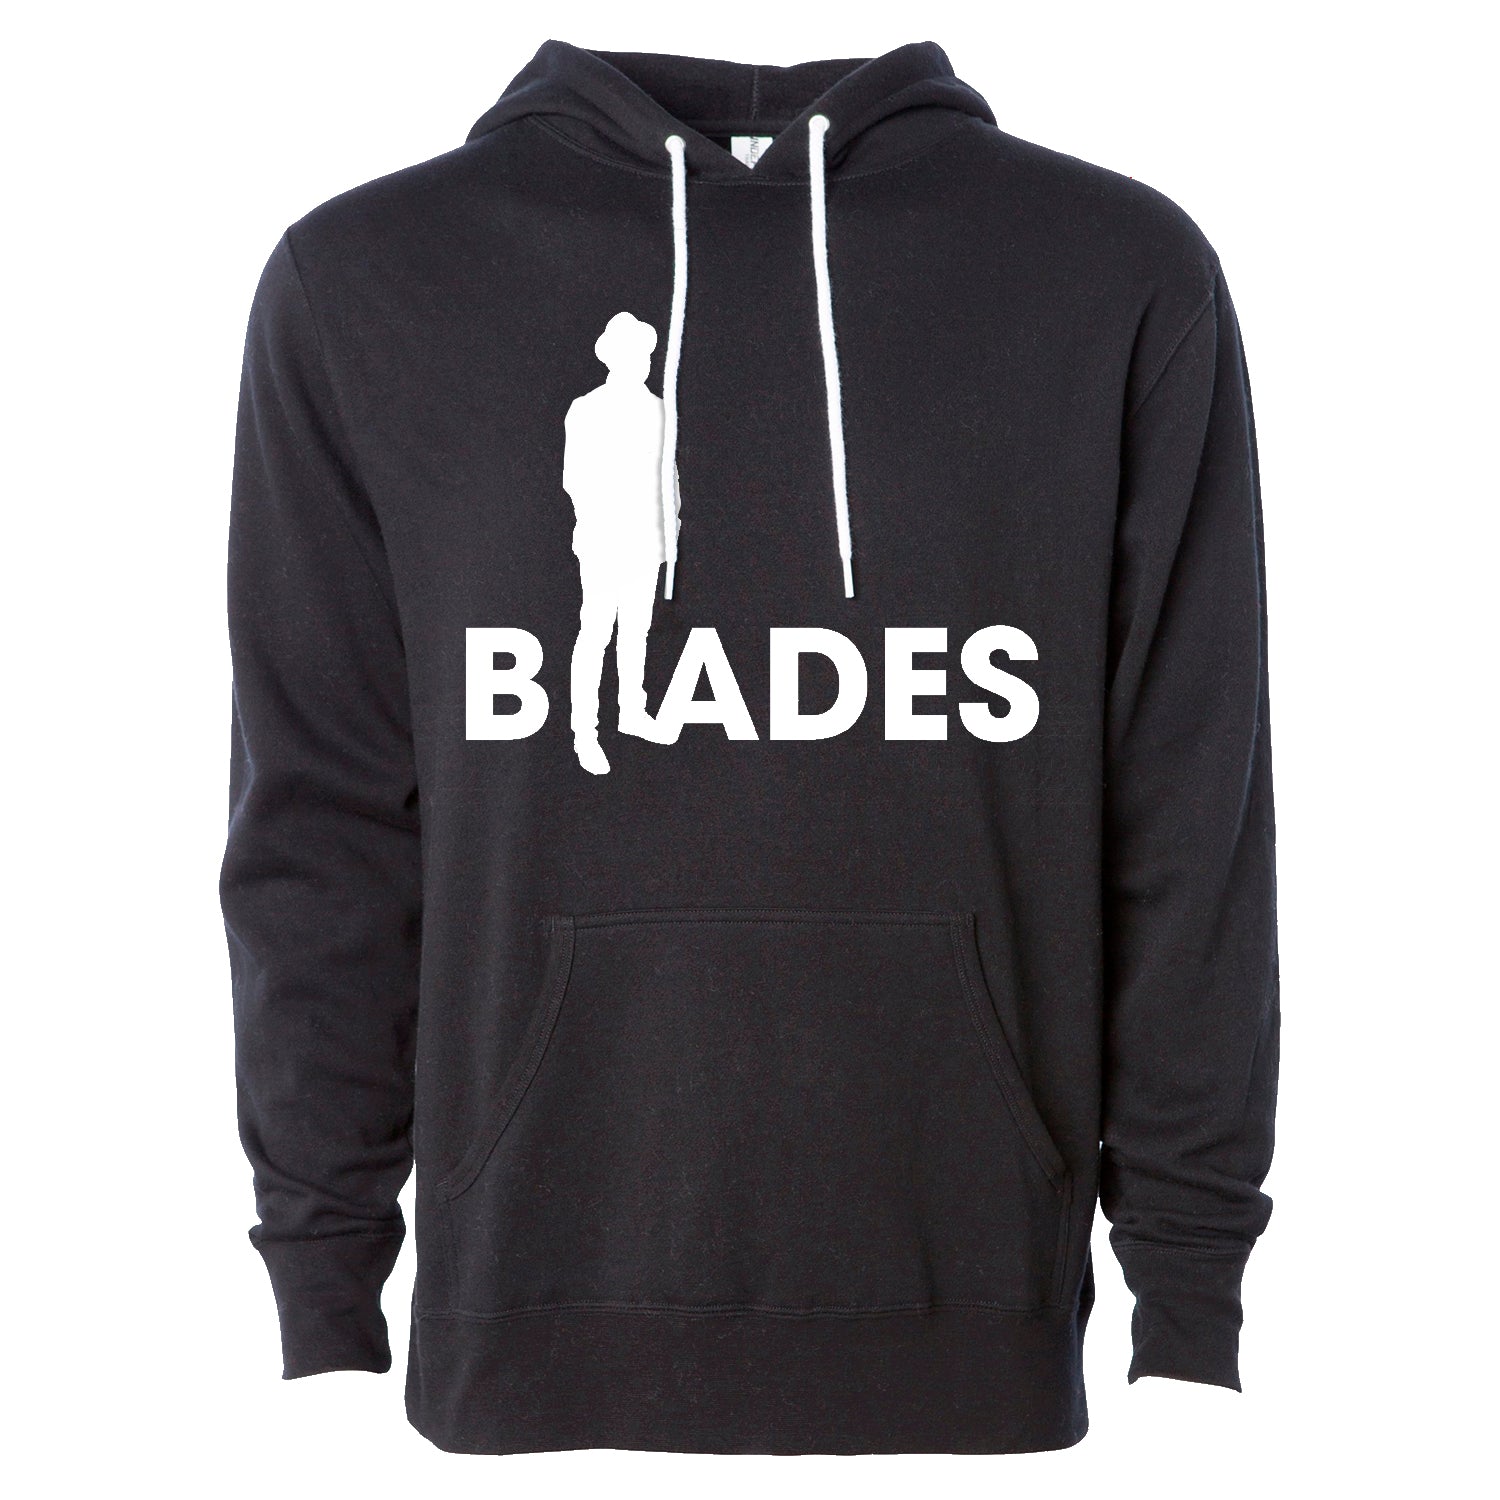 Blades Hooded Sweatshirt